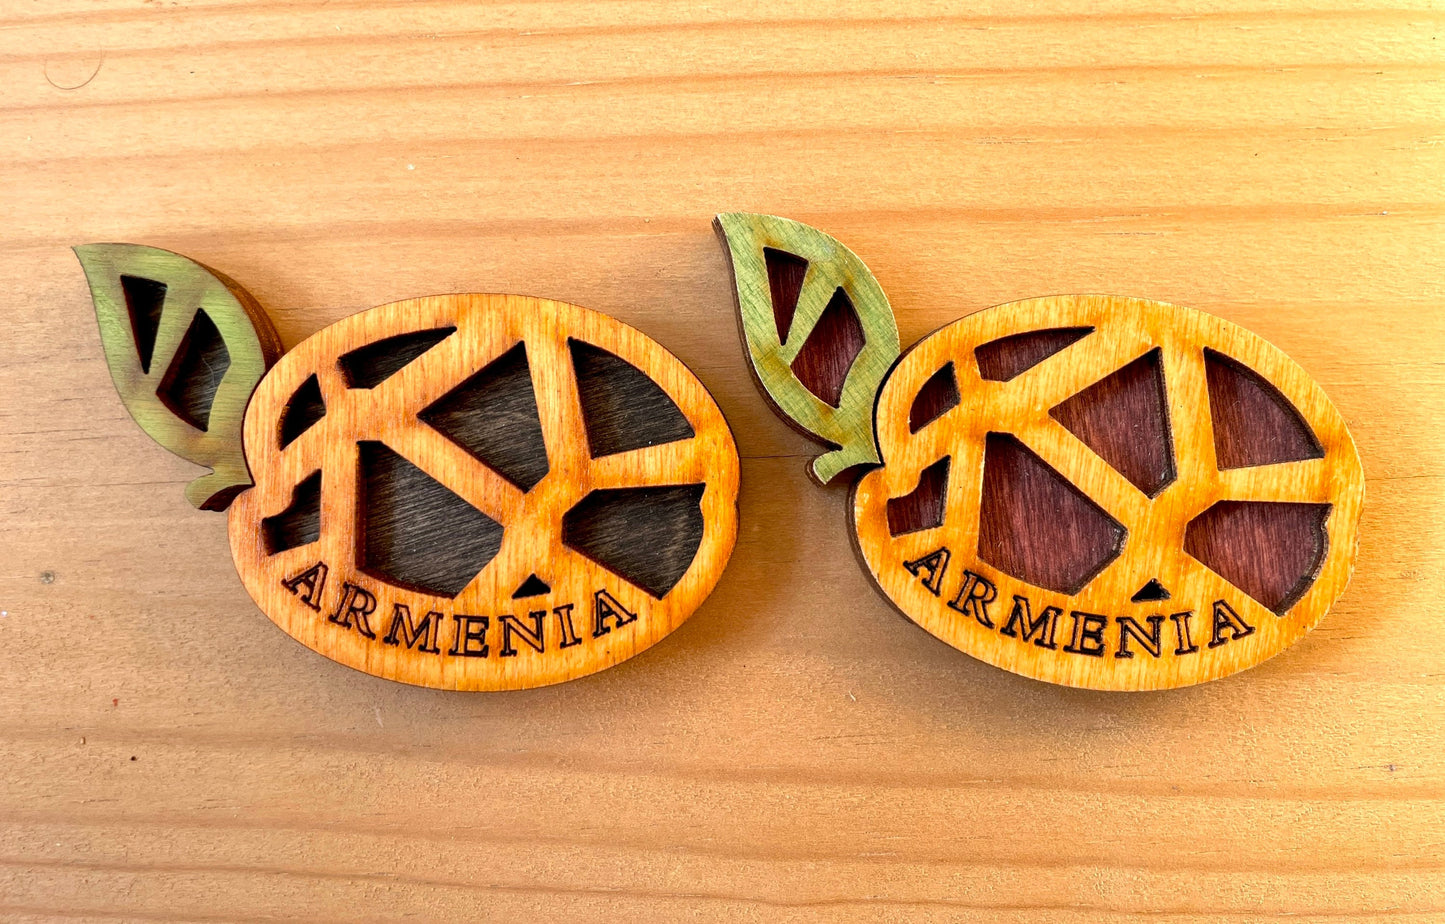 Magnet Geometric Apricot Motif Armenia Wood 8cm x 4cm